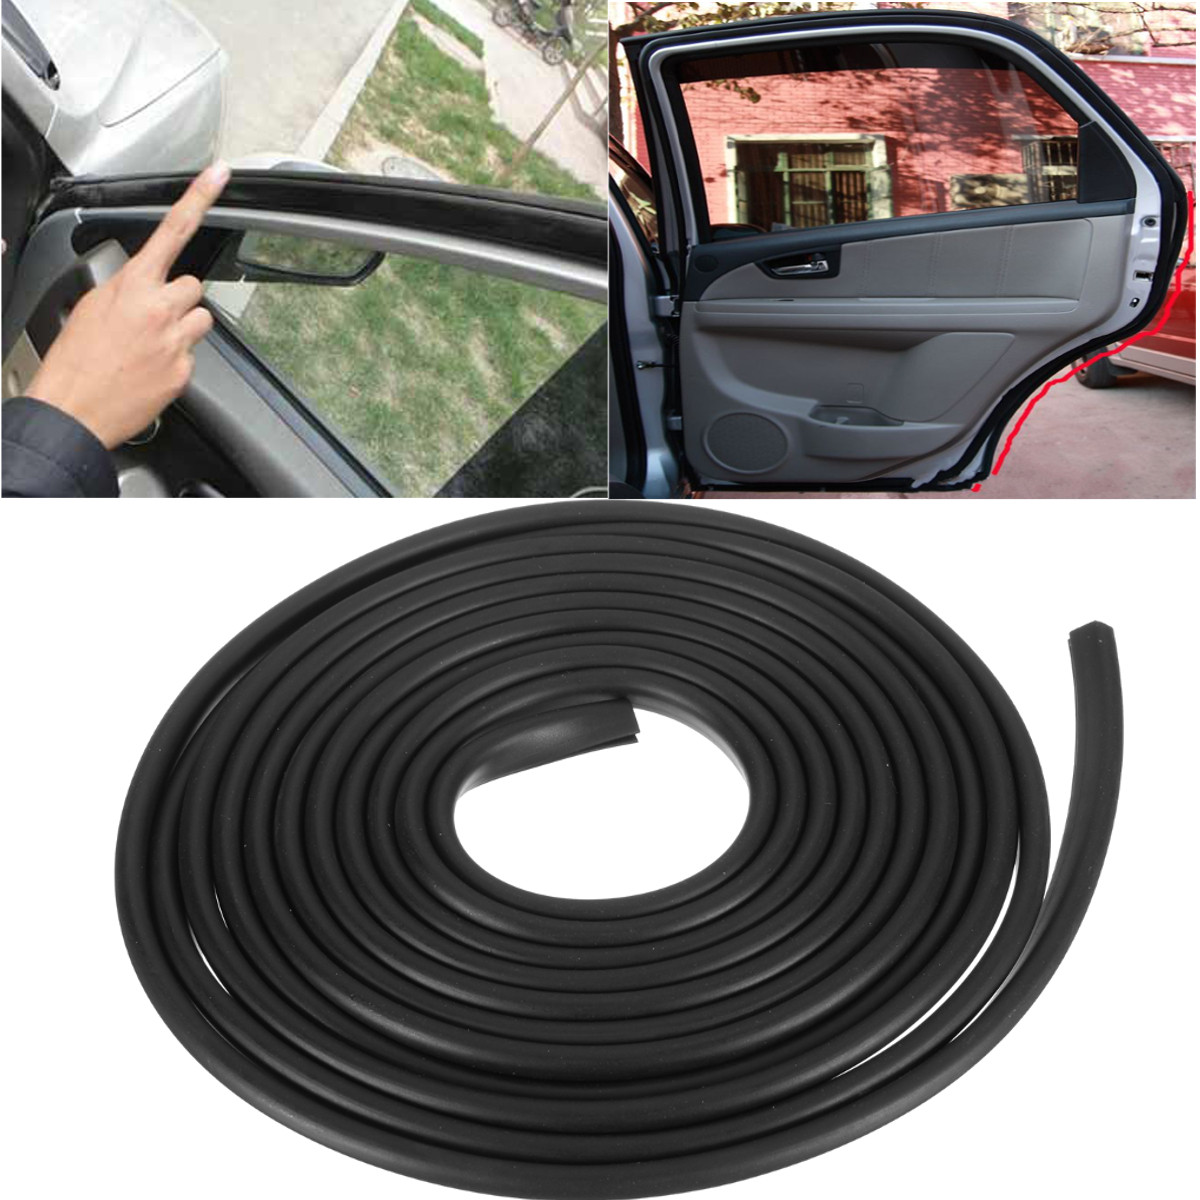 3m-Black-U-Shape-Rubber-Car-Door-Edge-Protector-Anti-collosion-Strips-Seal-Trim-Molding-Guards-1110111